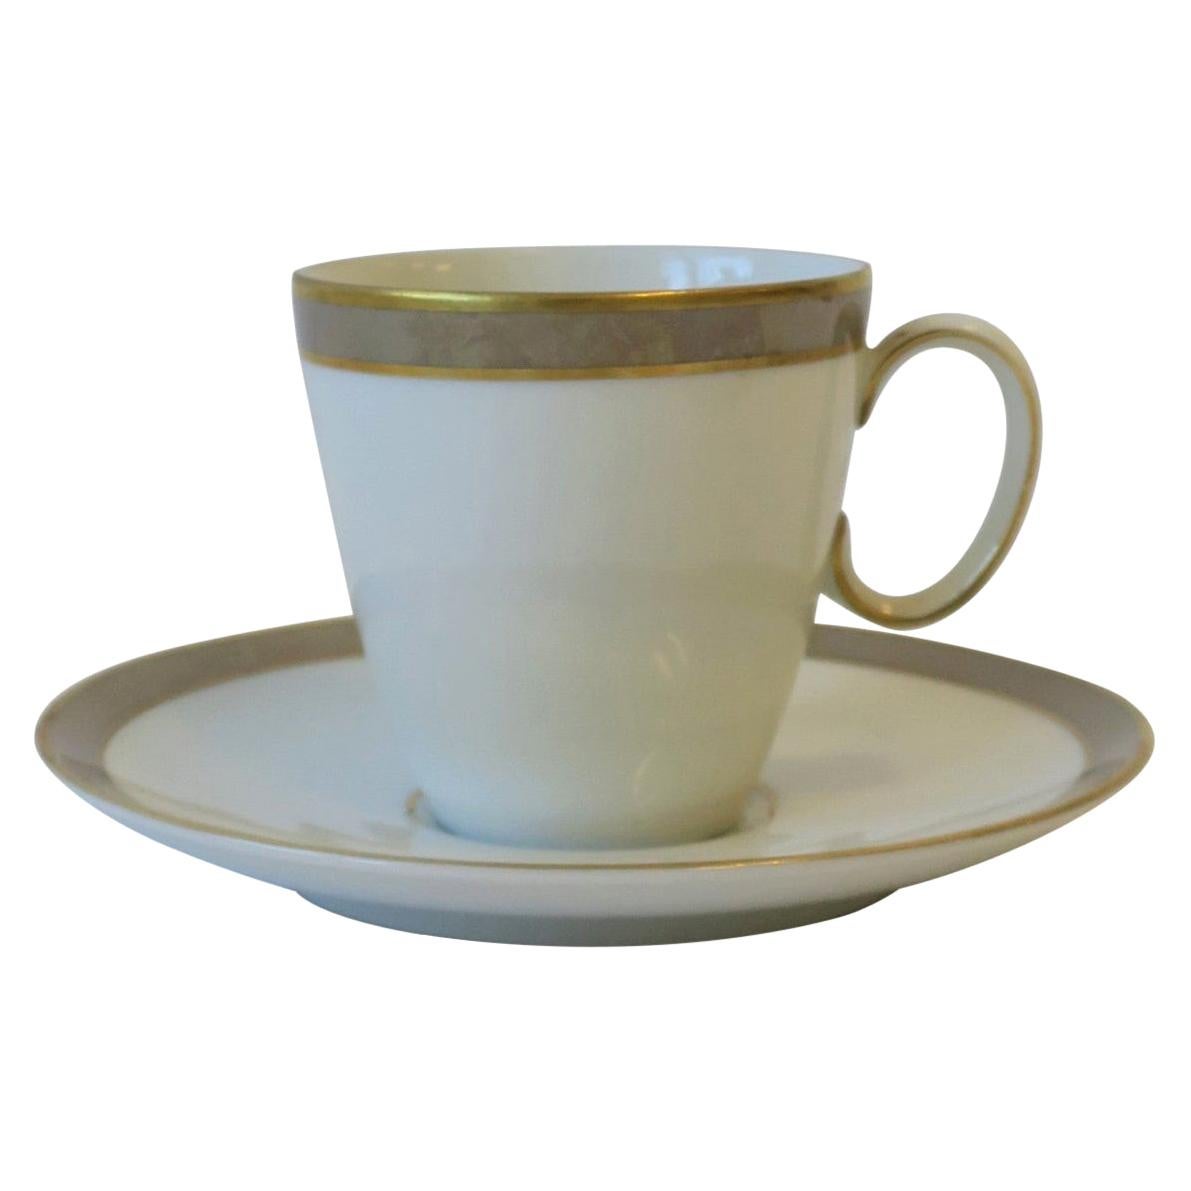 Designer Raymond Loewy White Grey Gold Espresso Coffee or Tea Cup